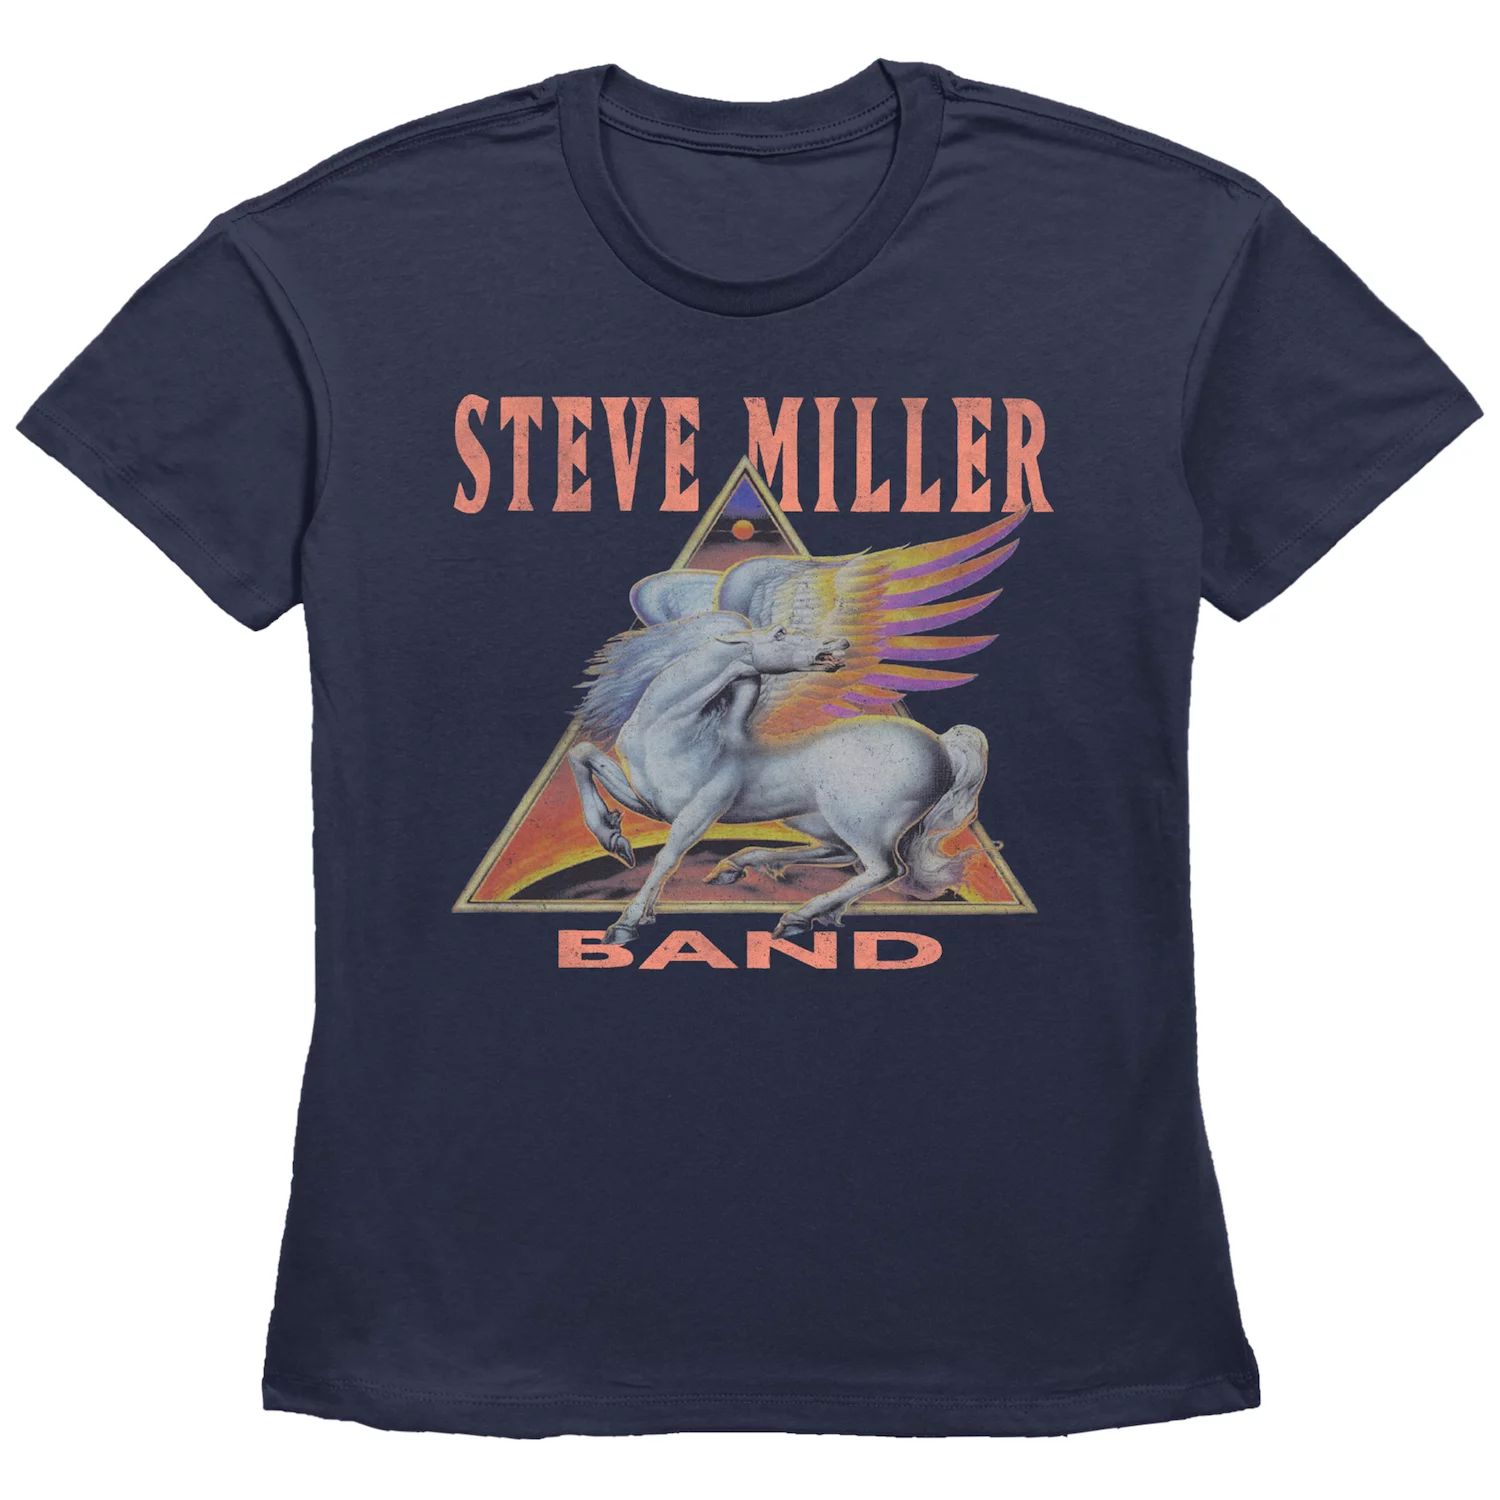 Детская футболка с треугольным логотипом The Steve Miller Band Pegasus и графическим рисунком Licensed Character